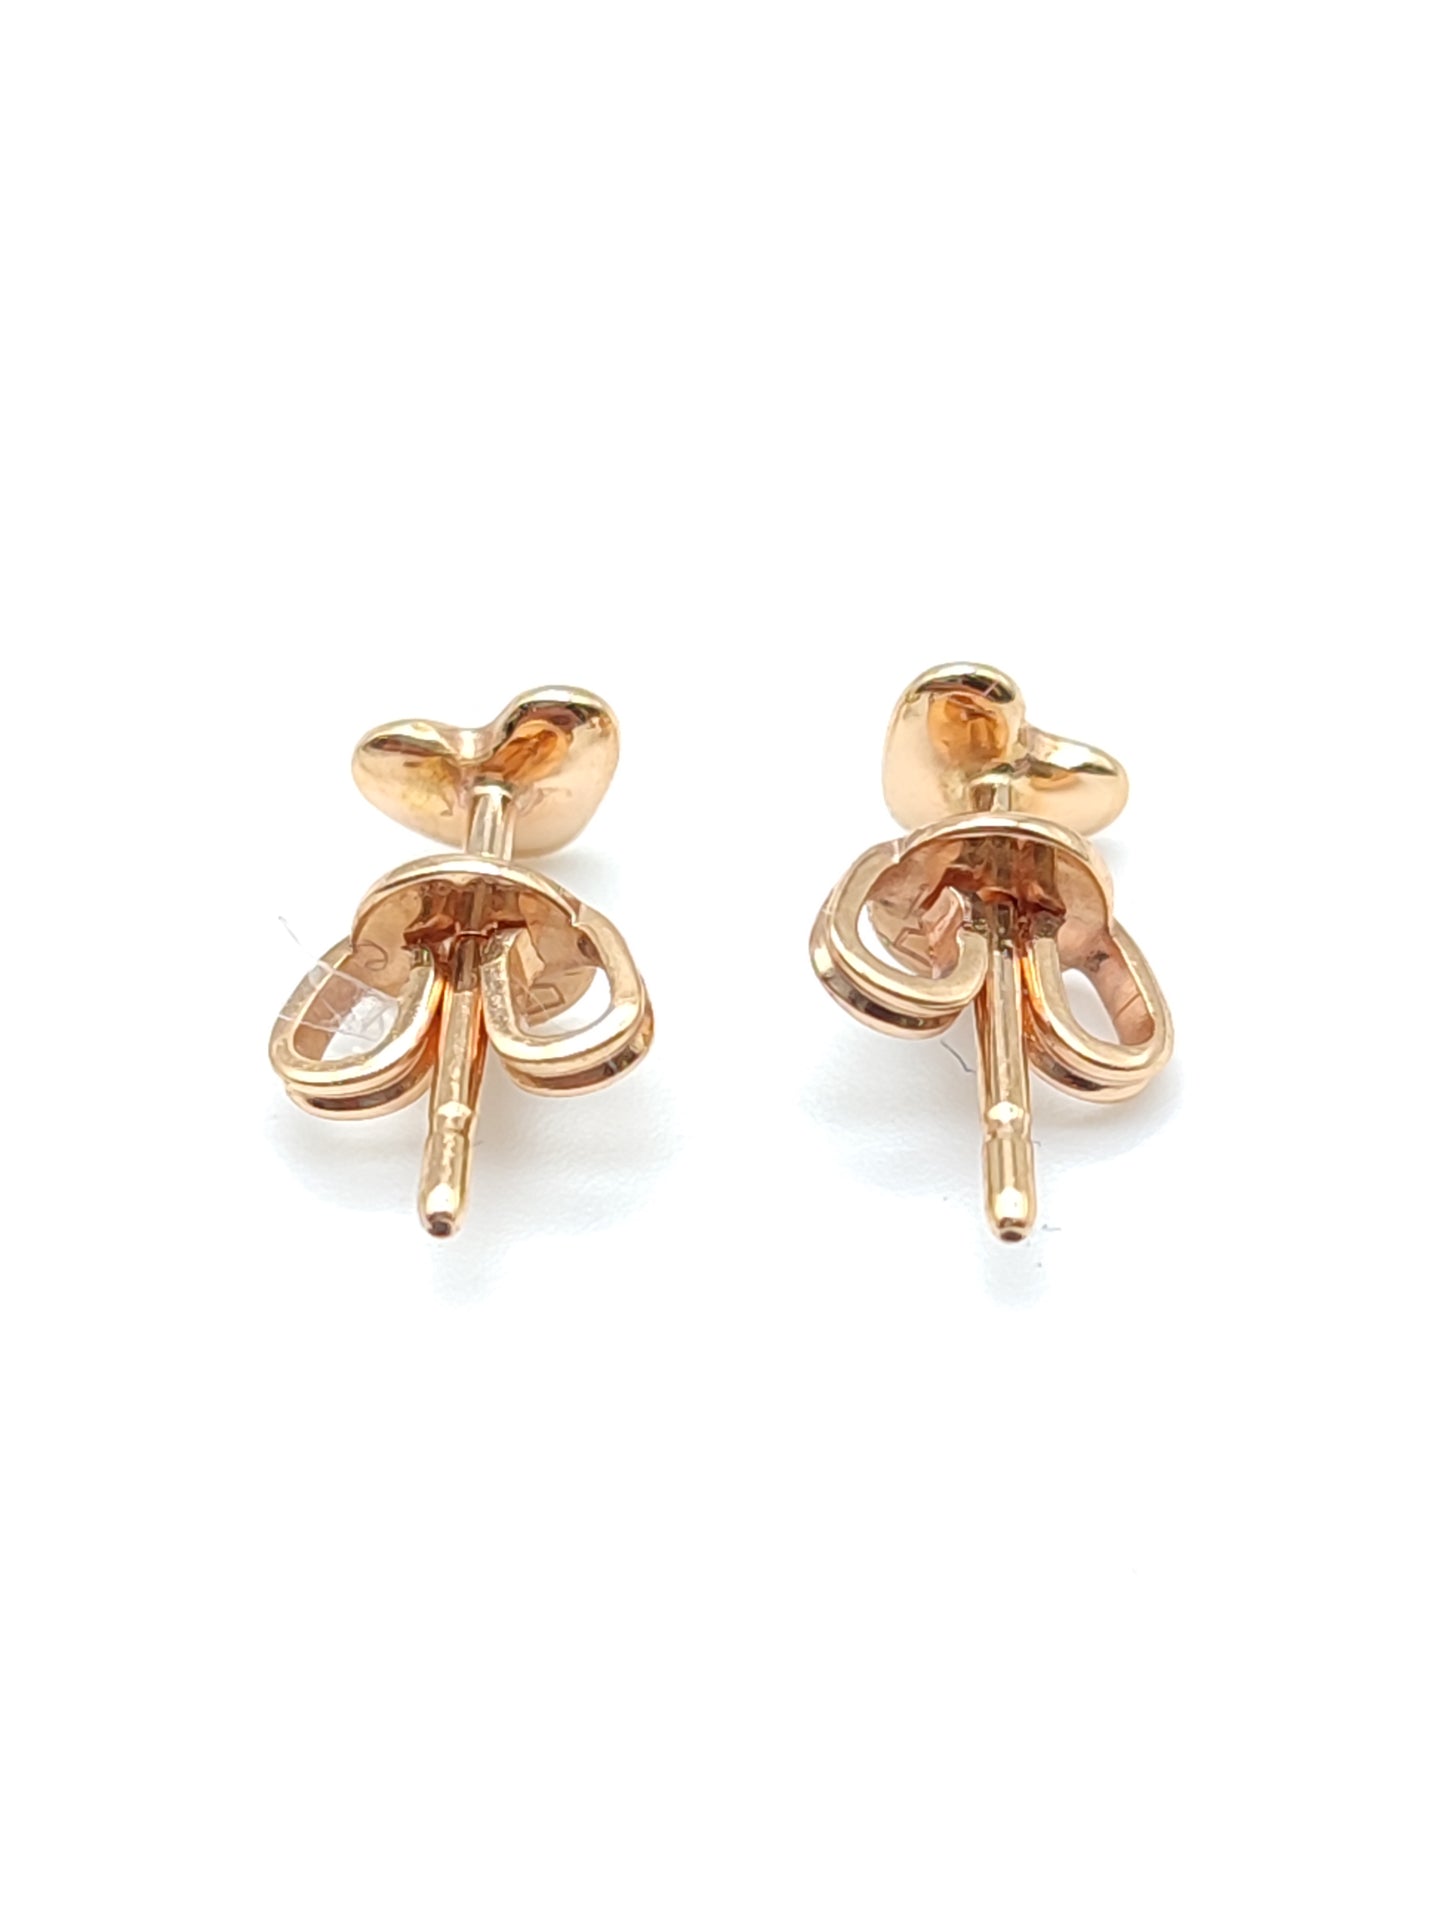 Gold heart earrings with diamonds